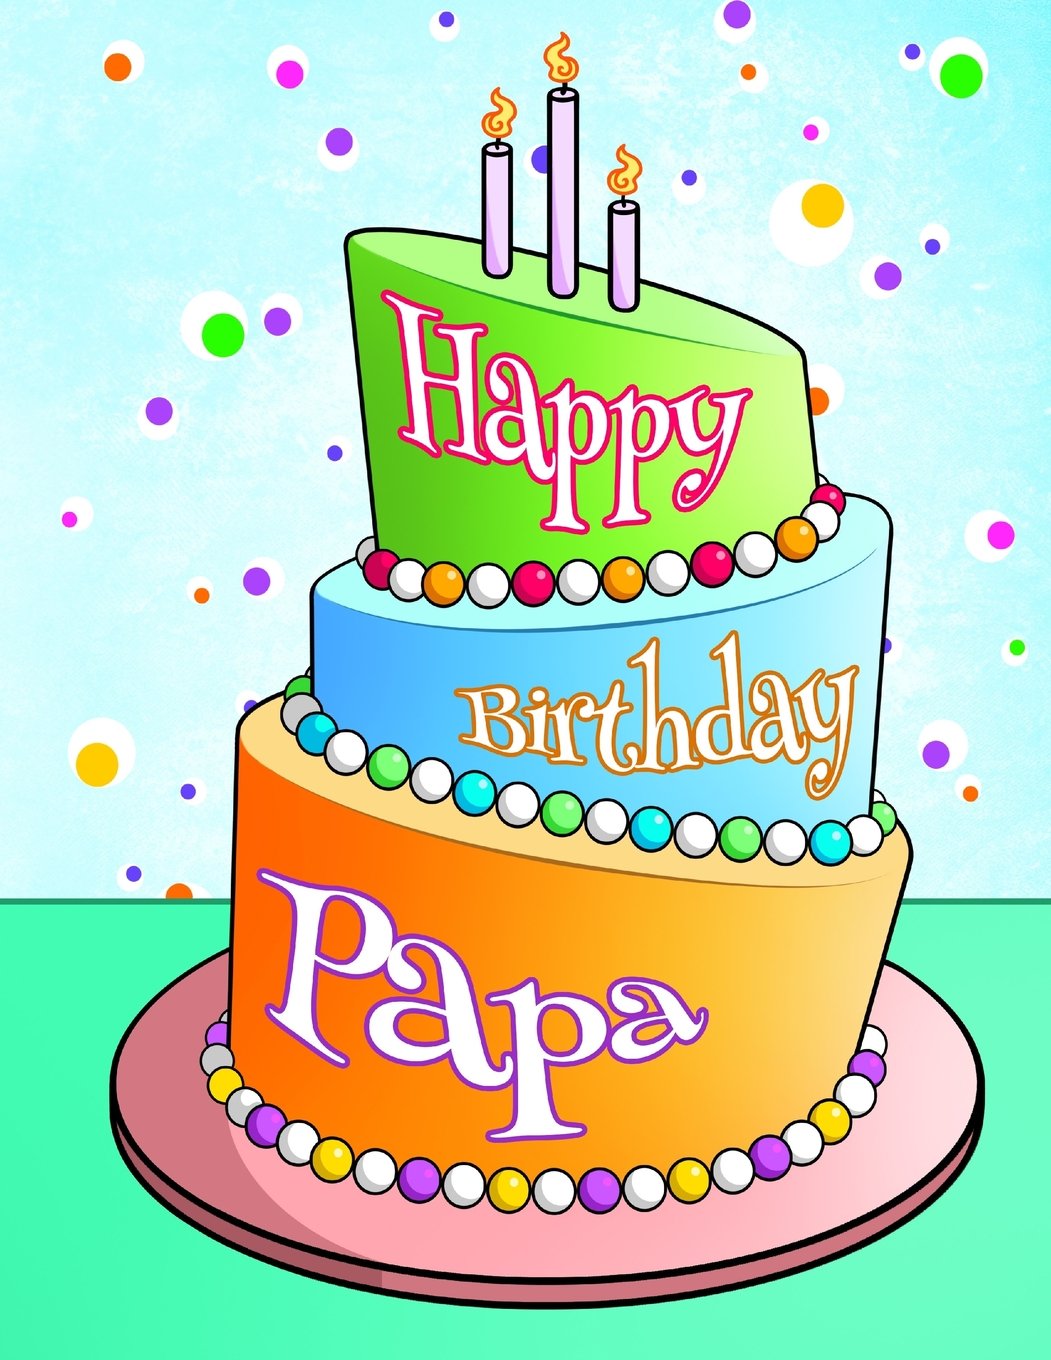 Happy Birthday Papa Wallpapers - Wallpaper Cave